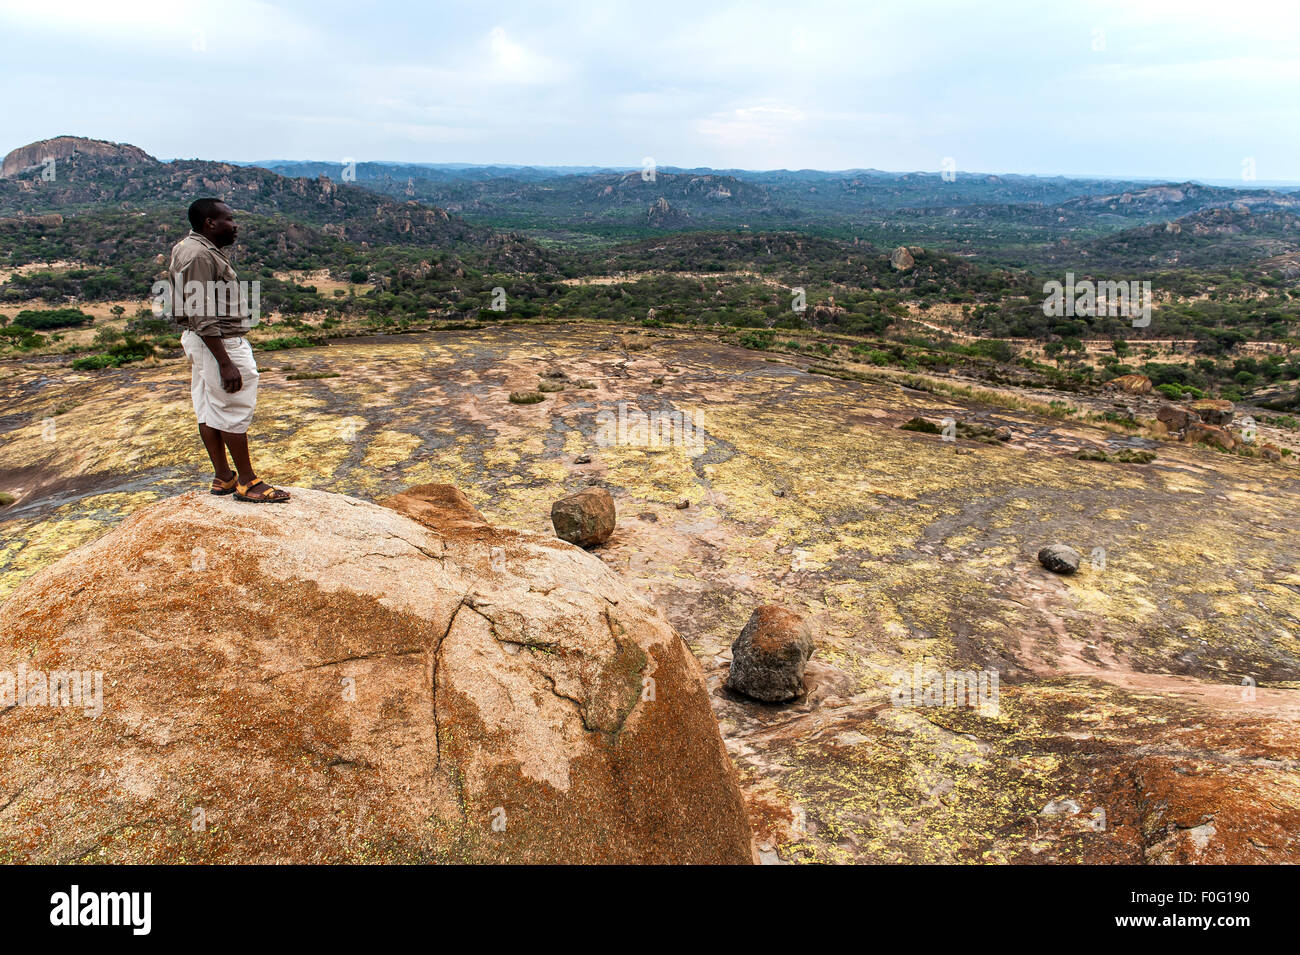 Local man standing on rock World's View Eastern Highlands mountain range Zimbabwe Africa Stock Photo